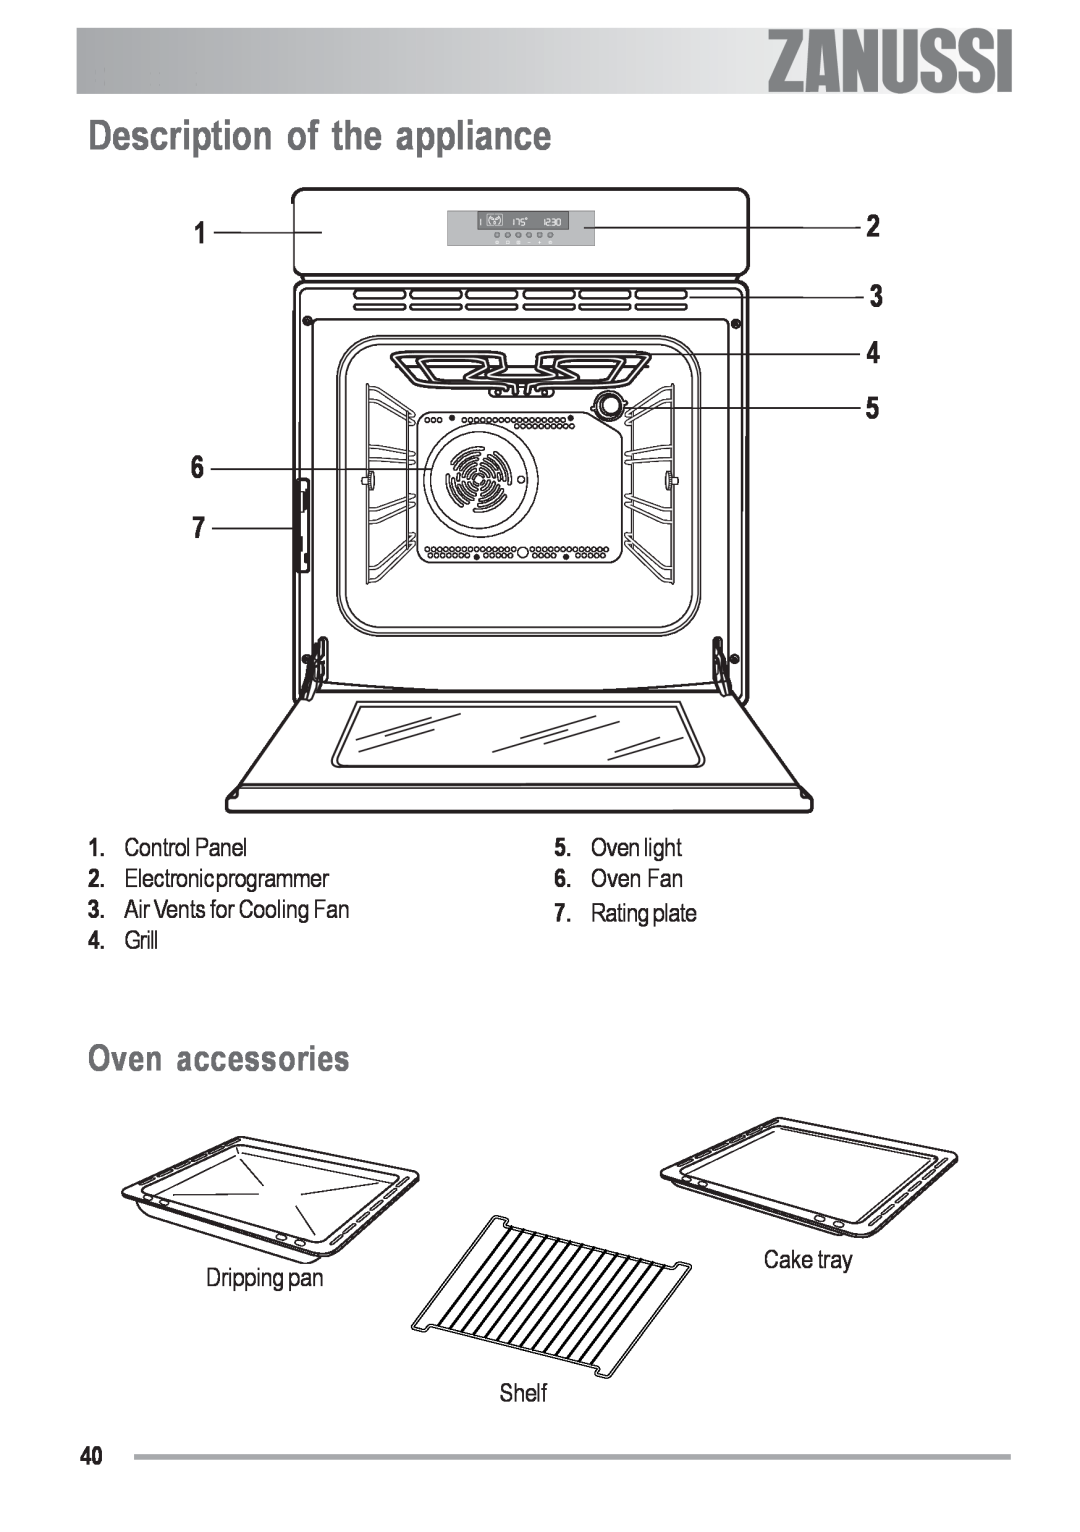 Zanussi ZOB 590 Description of the appliance, electrolux, Control Panel, Electronic programmer, Oven Fan, Grill, Shelf 